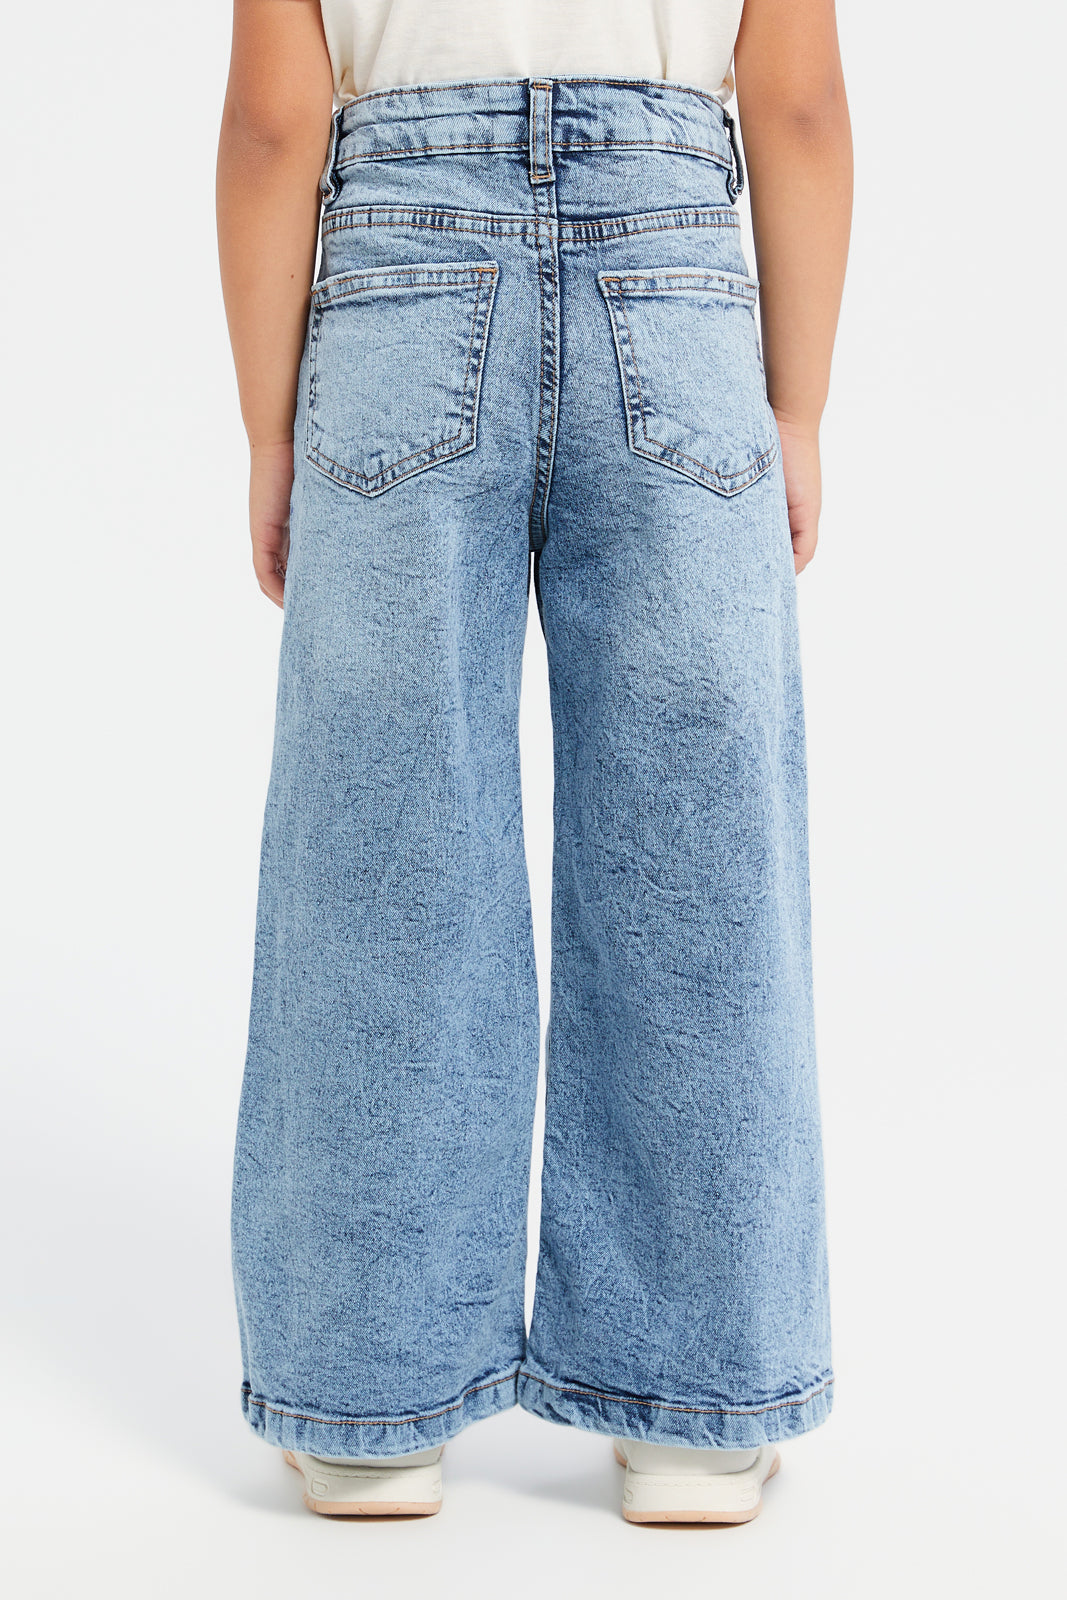 Buy Girls Blue Plain Flared Jeans 128301152 in Saudi Arabia